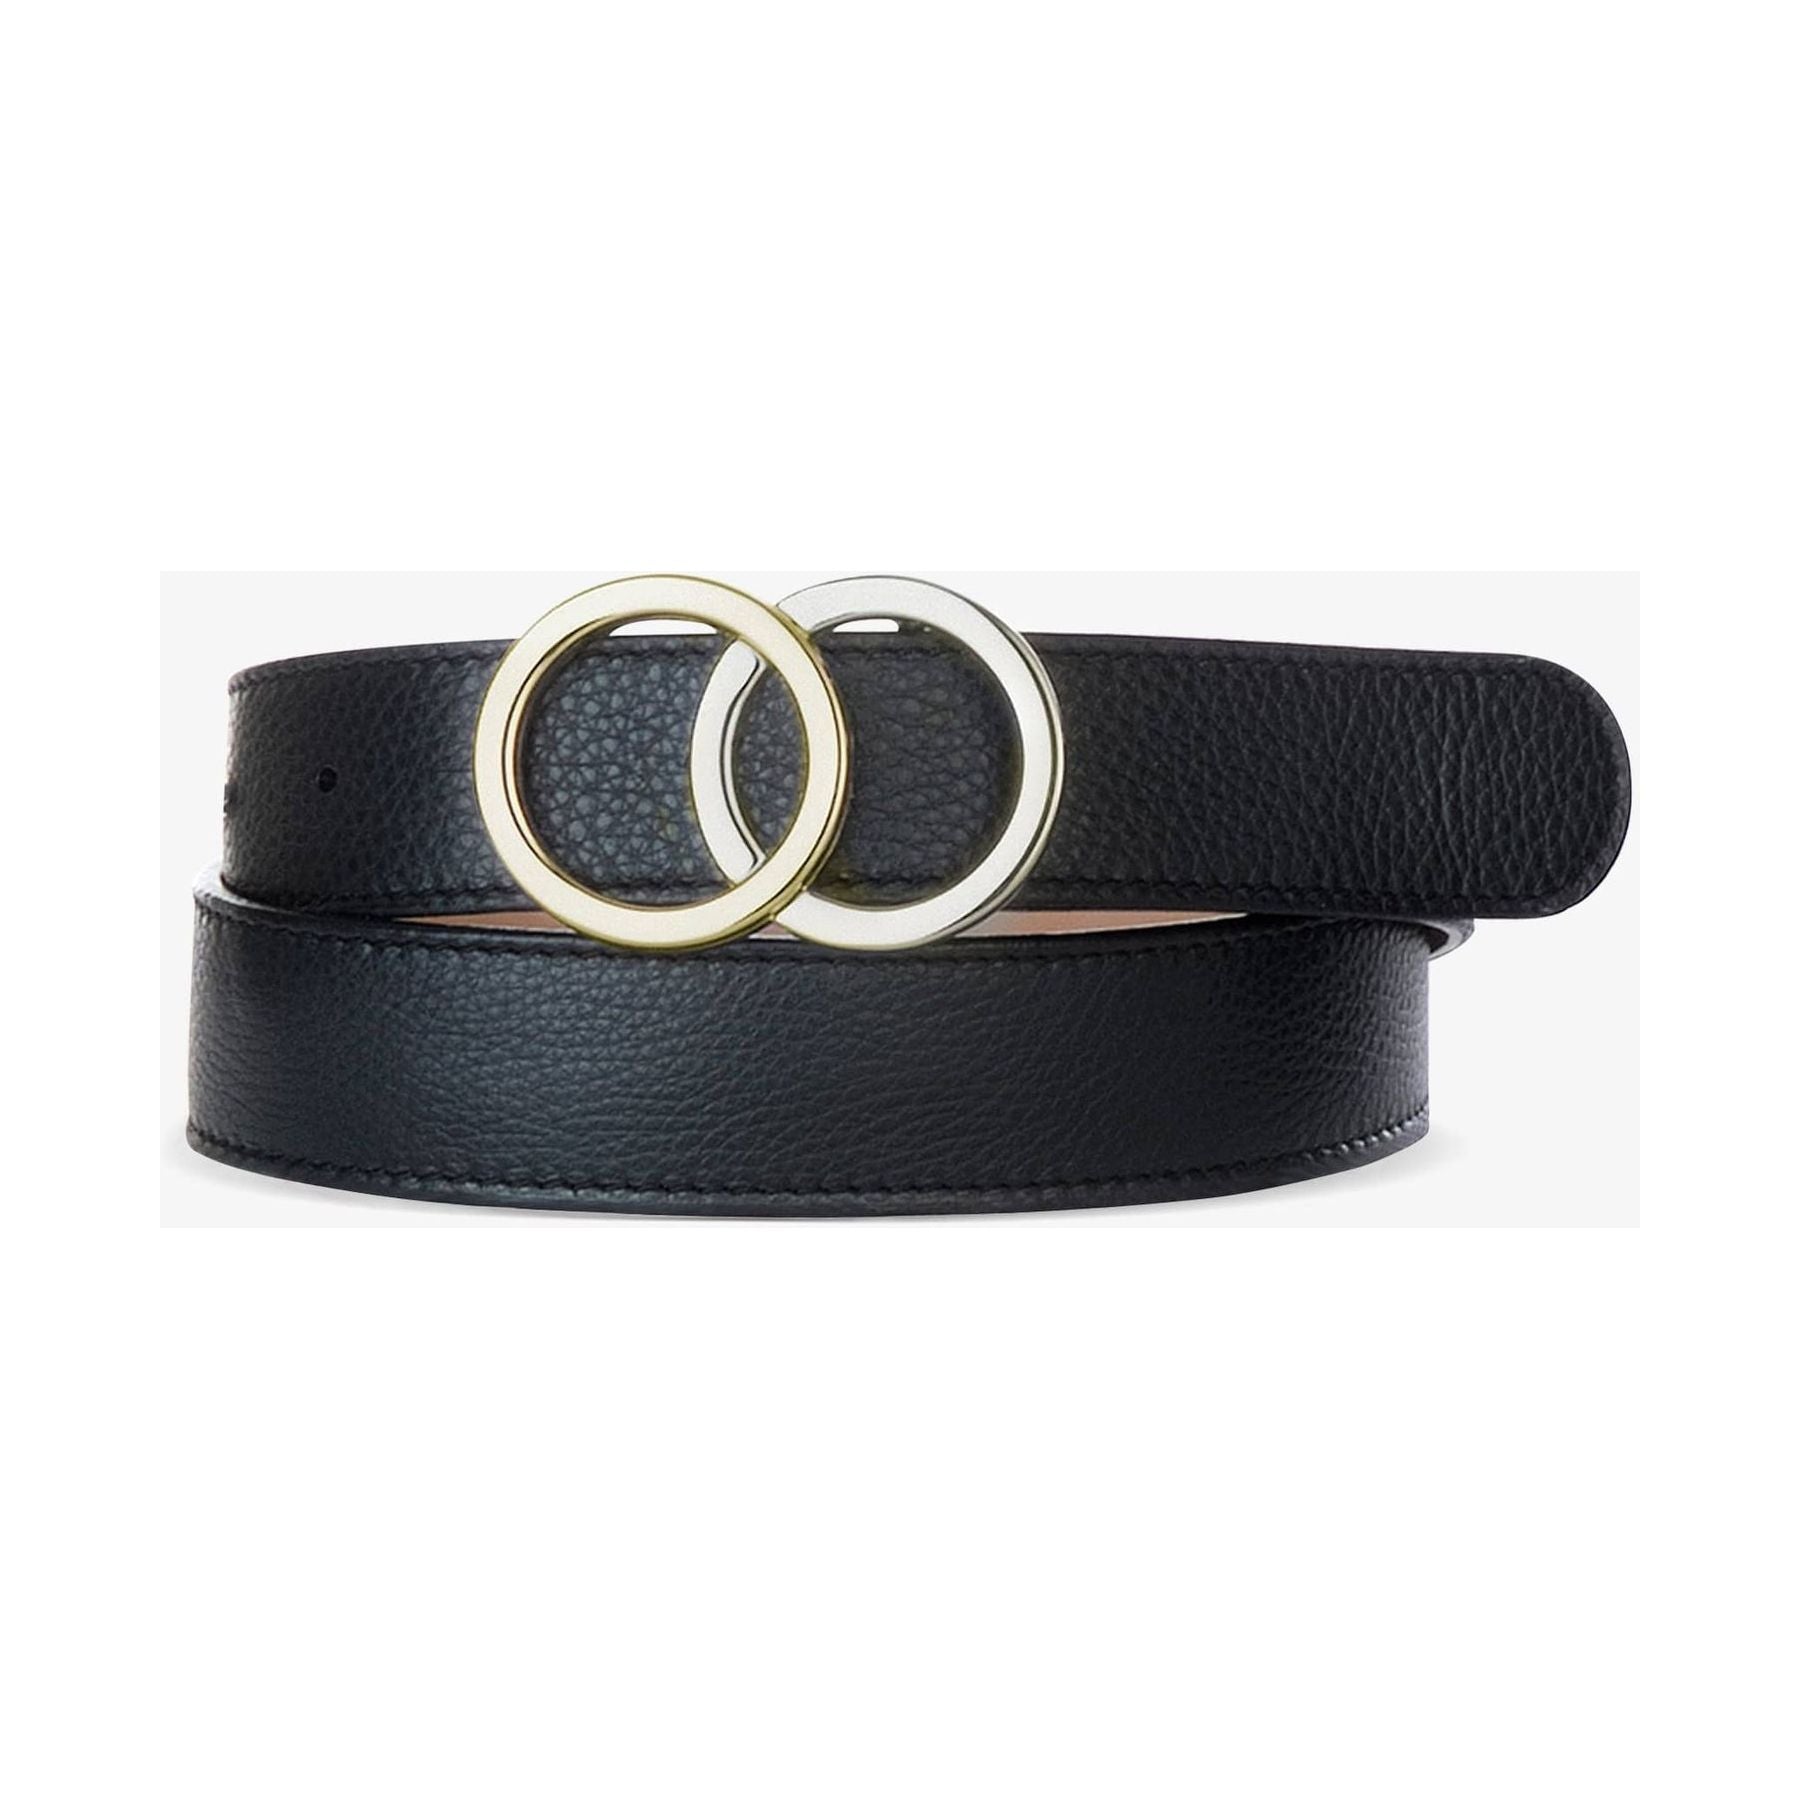 Brave - Women's Otir Belt in Black Pebbled-SQ1893438